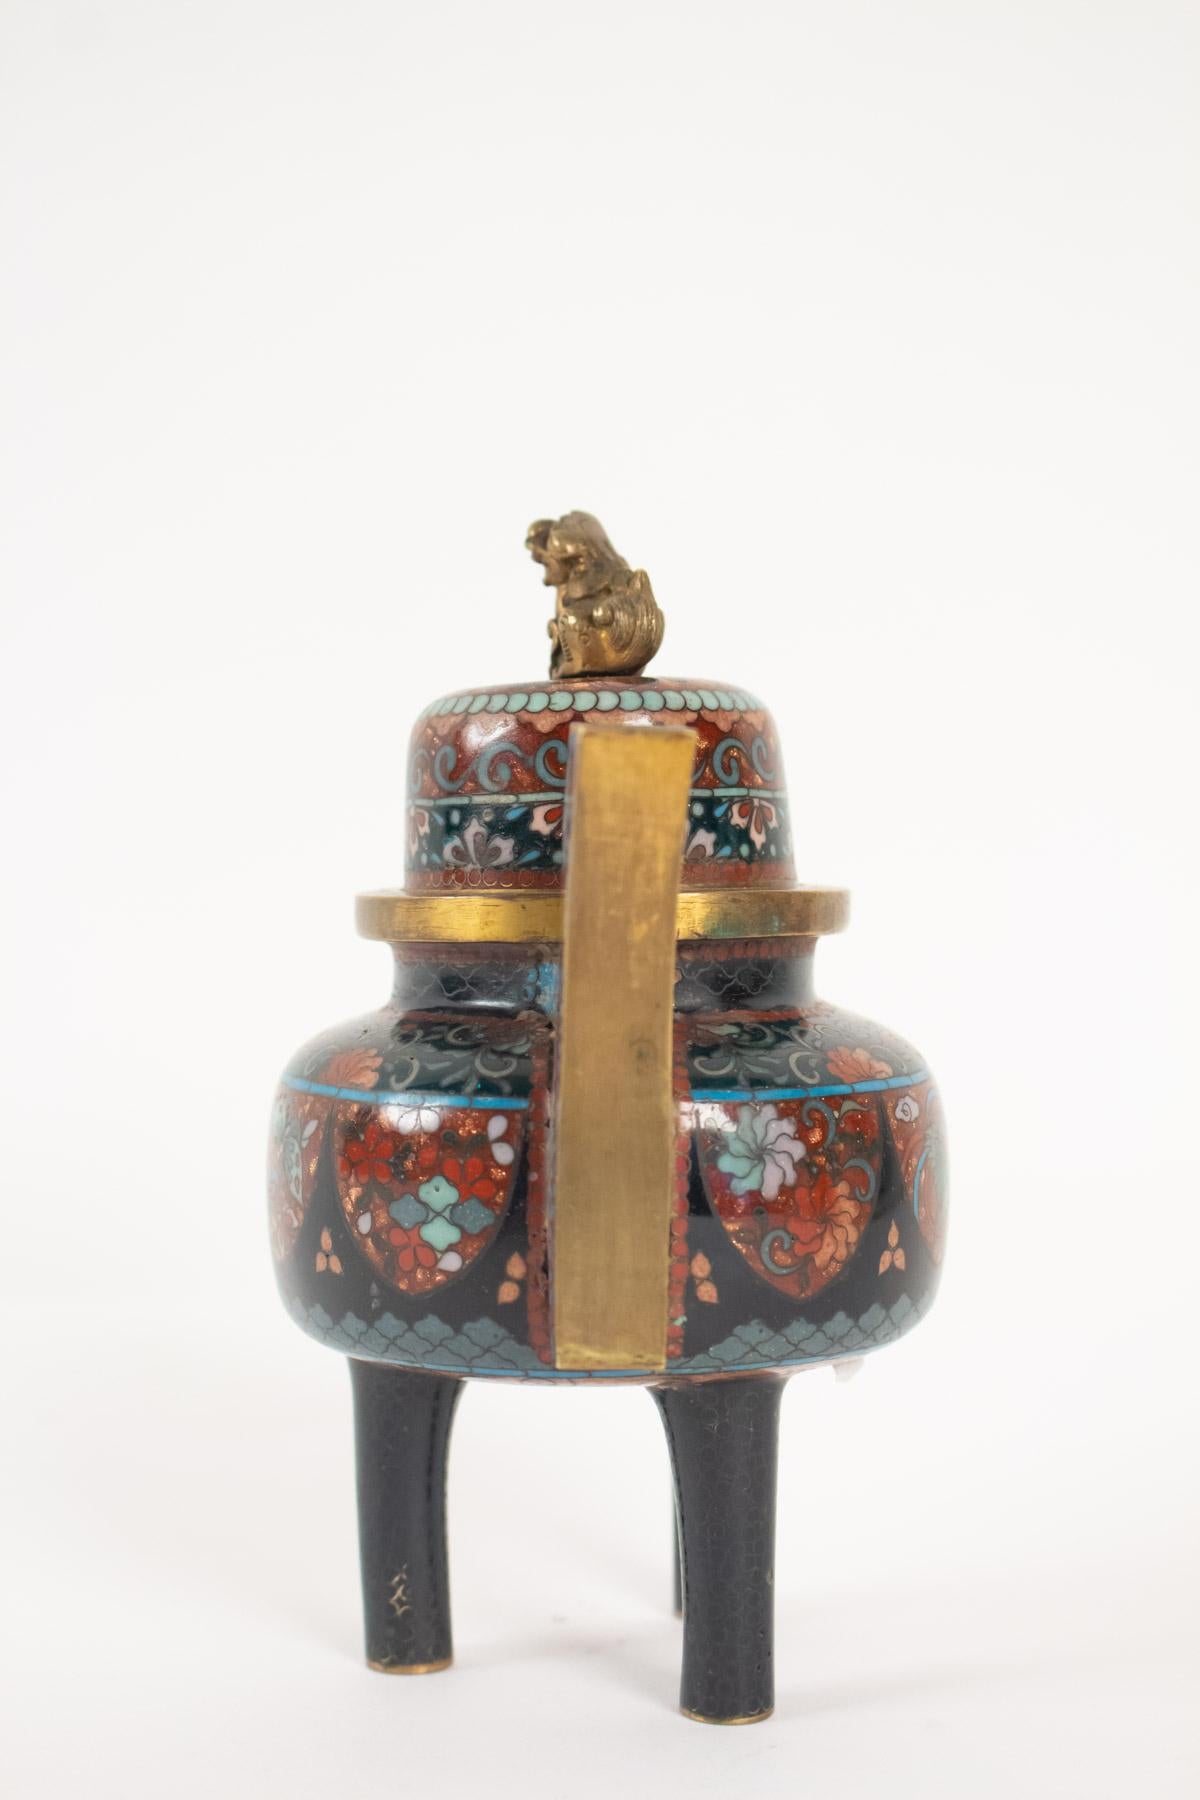 Japonisme Perfume Burner in Copper Decor Cloisonné Enamels, Topped of a Fo Dog, Japan